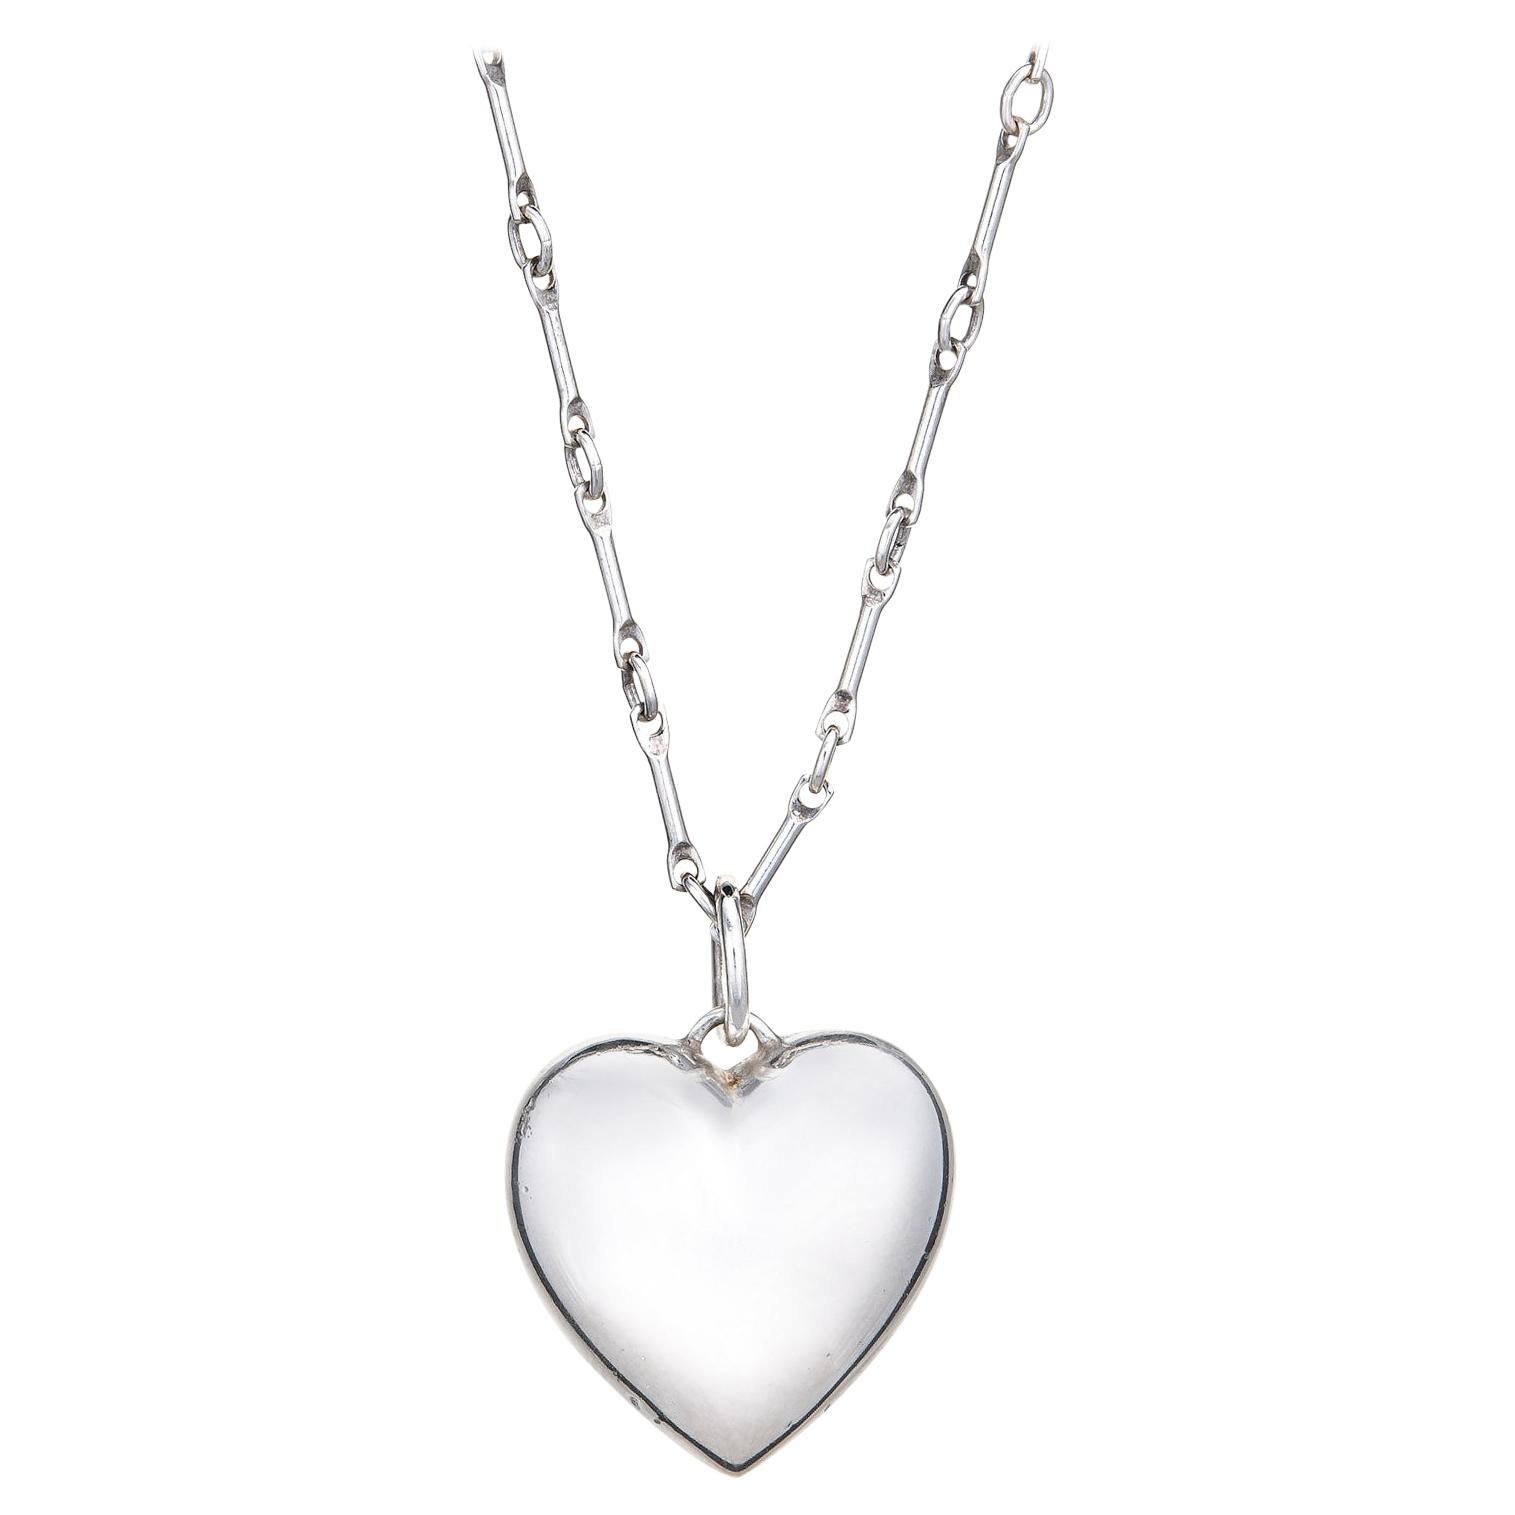 Tiffany & Co Heart Necklace Sterling Silver Estate Fine Jewelry Chain